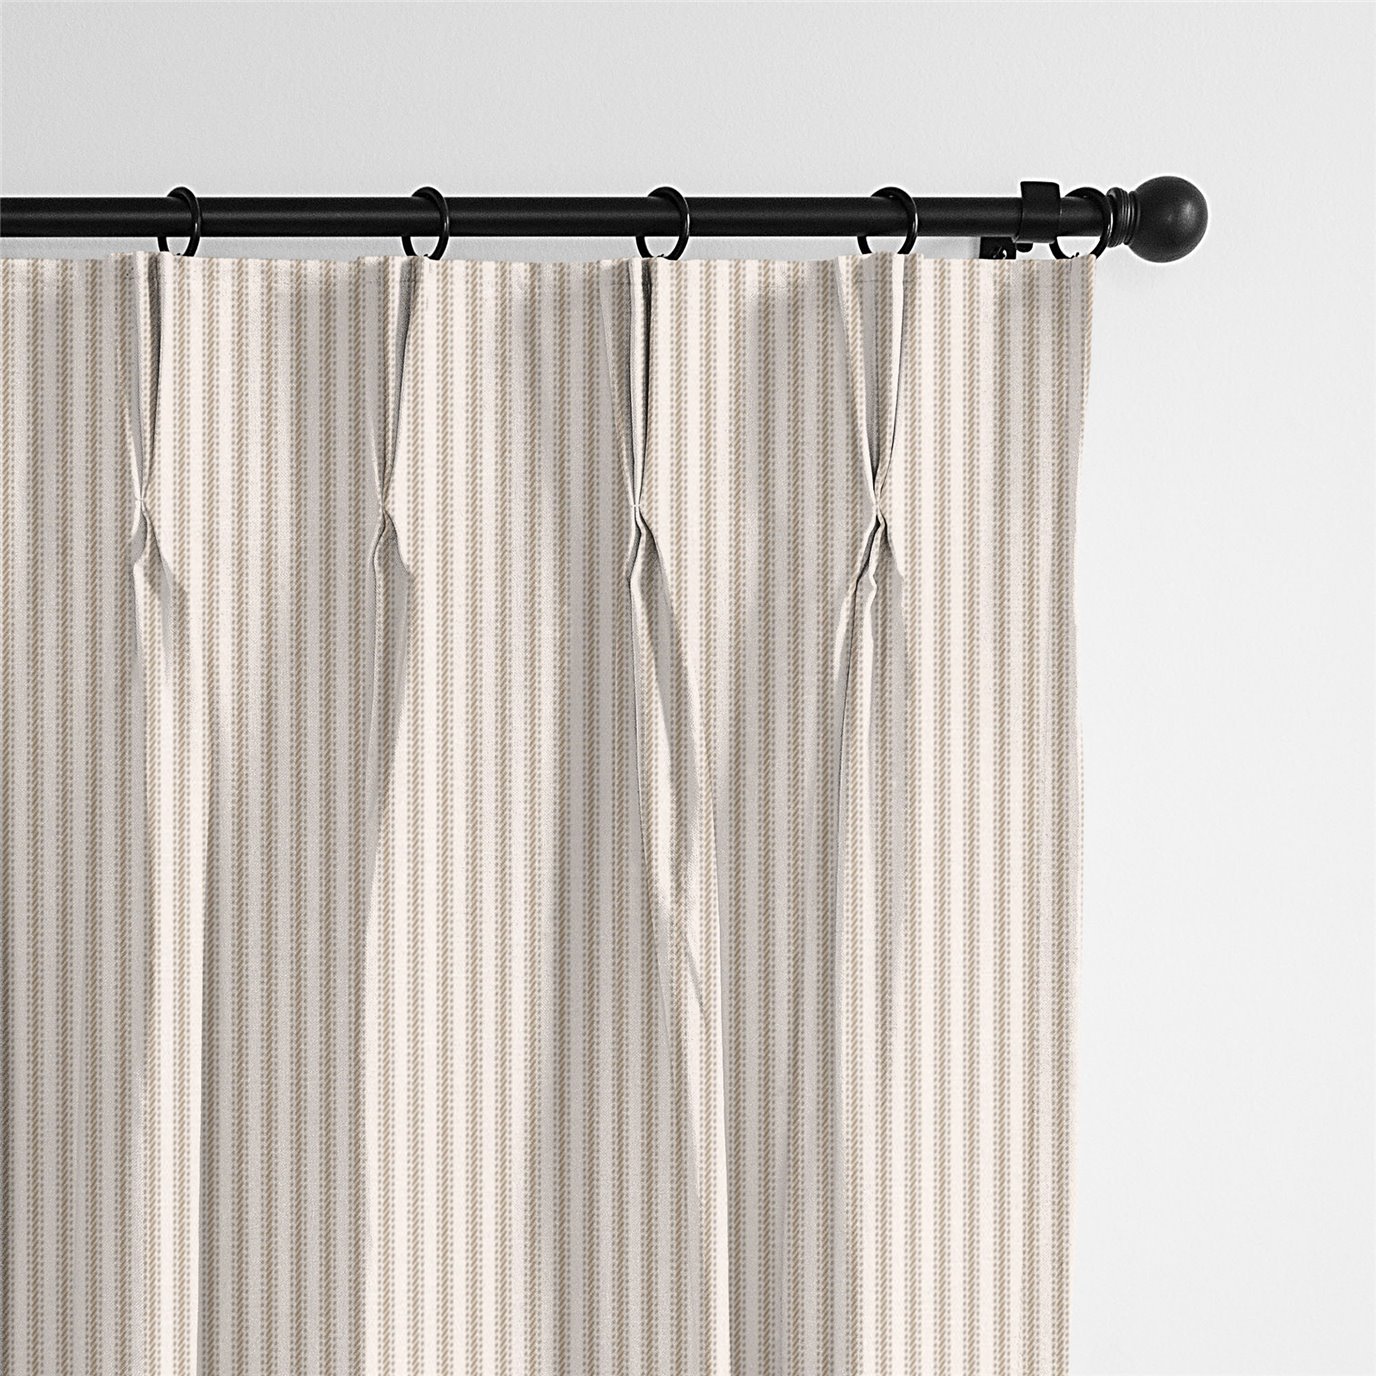 Cruz Ticking Stripes Taupe/Ivory Pinch Pleat Drapery Panel - Pair - Size 20"x96"